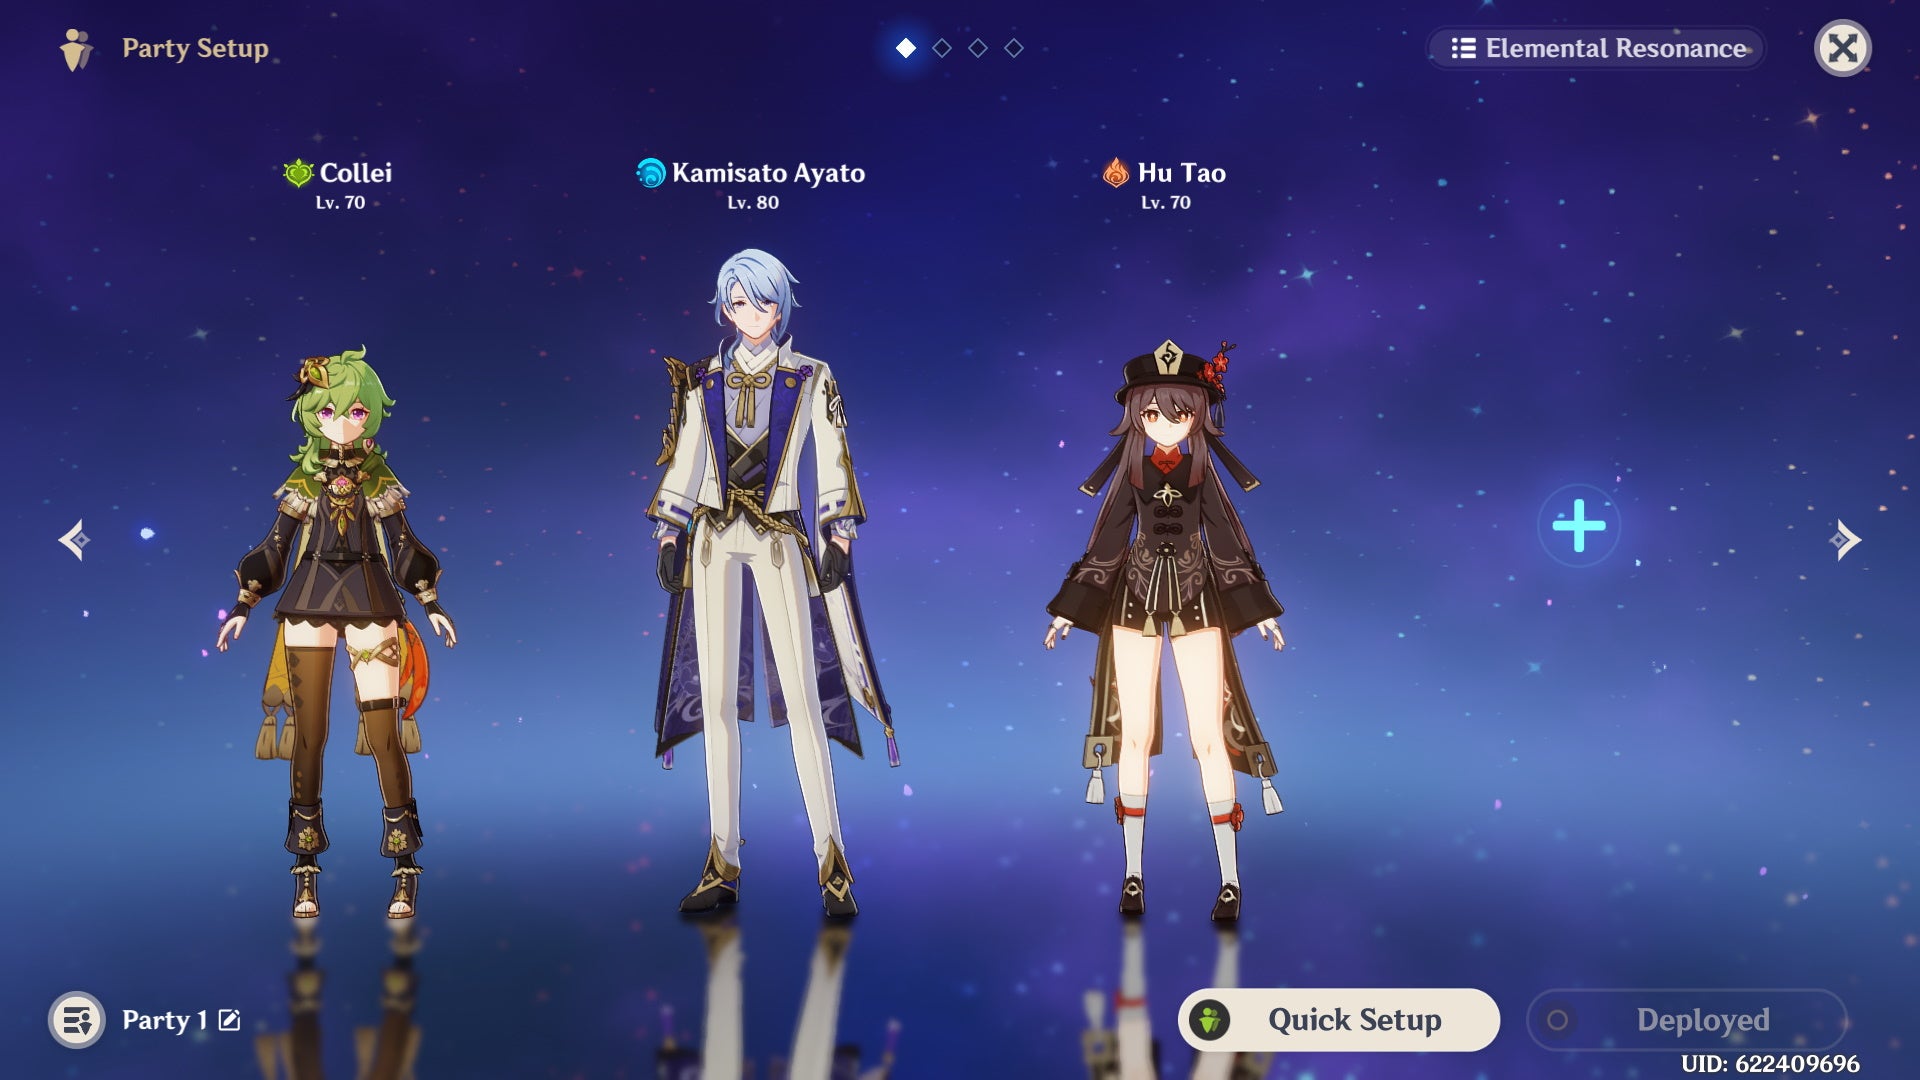 Dori team comps: A menu page showing Collei, Ayato, and Hu Tao